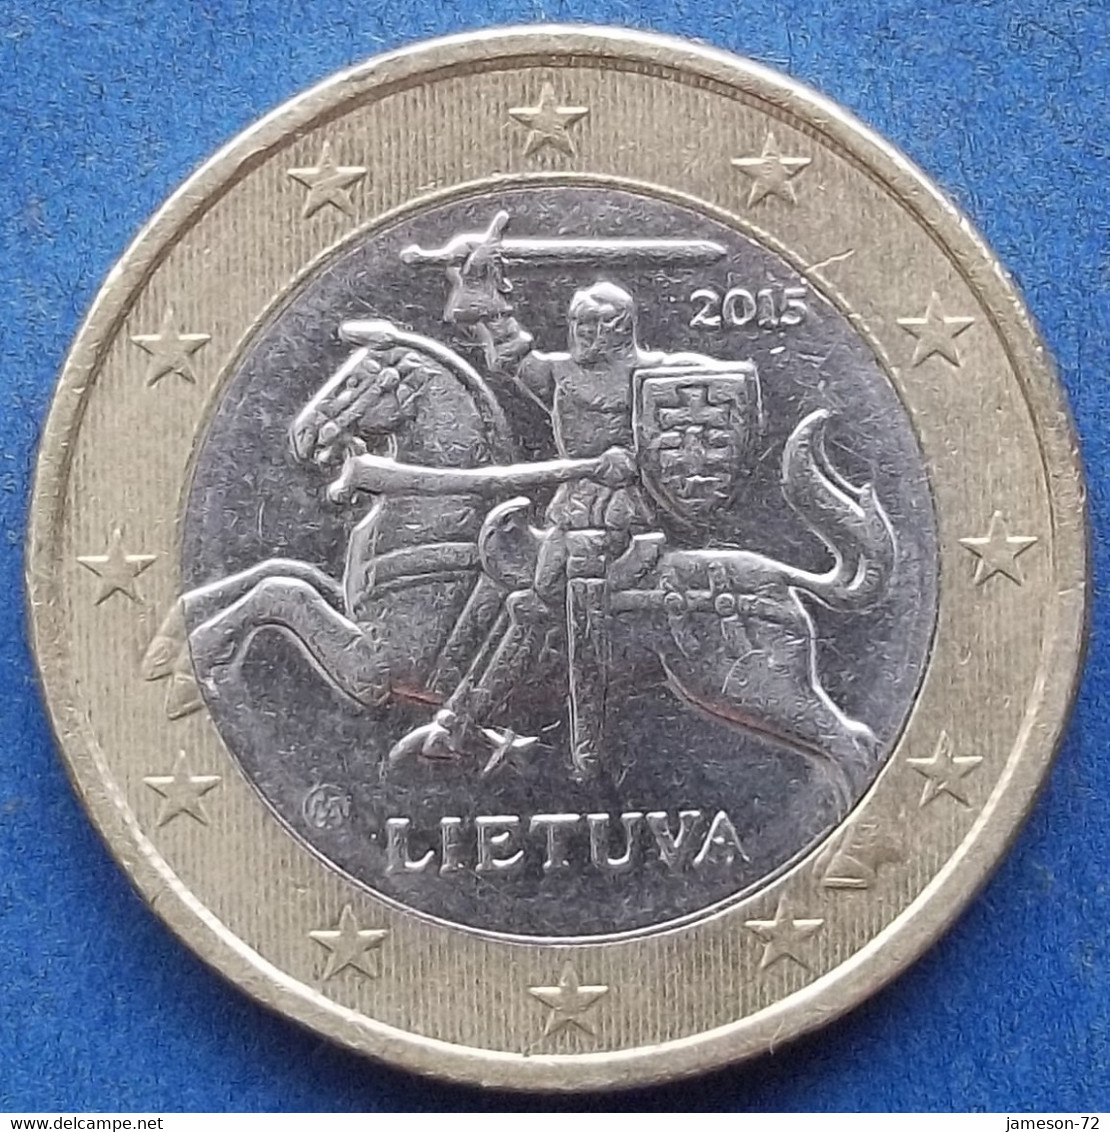 LITHUANIA - 1 Euro 2015 "Vytis" KM# 211 Bi-metallic - Edelweiss Coins - Lithuania